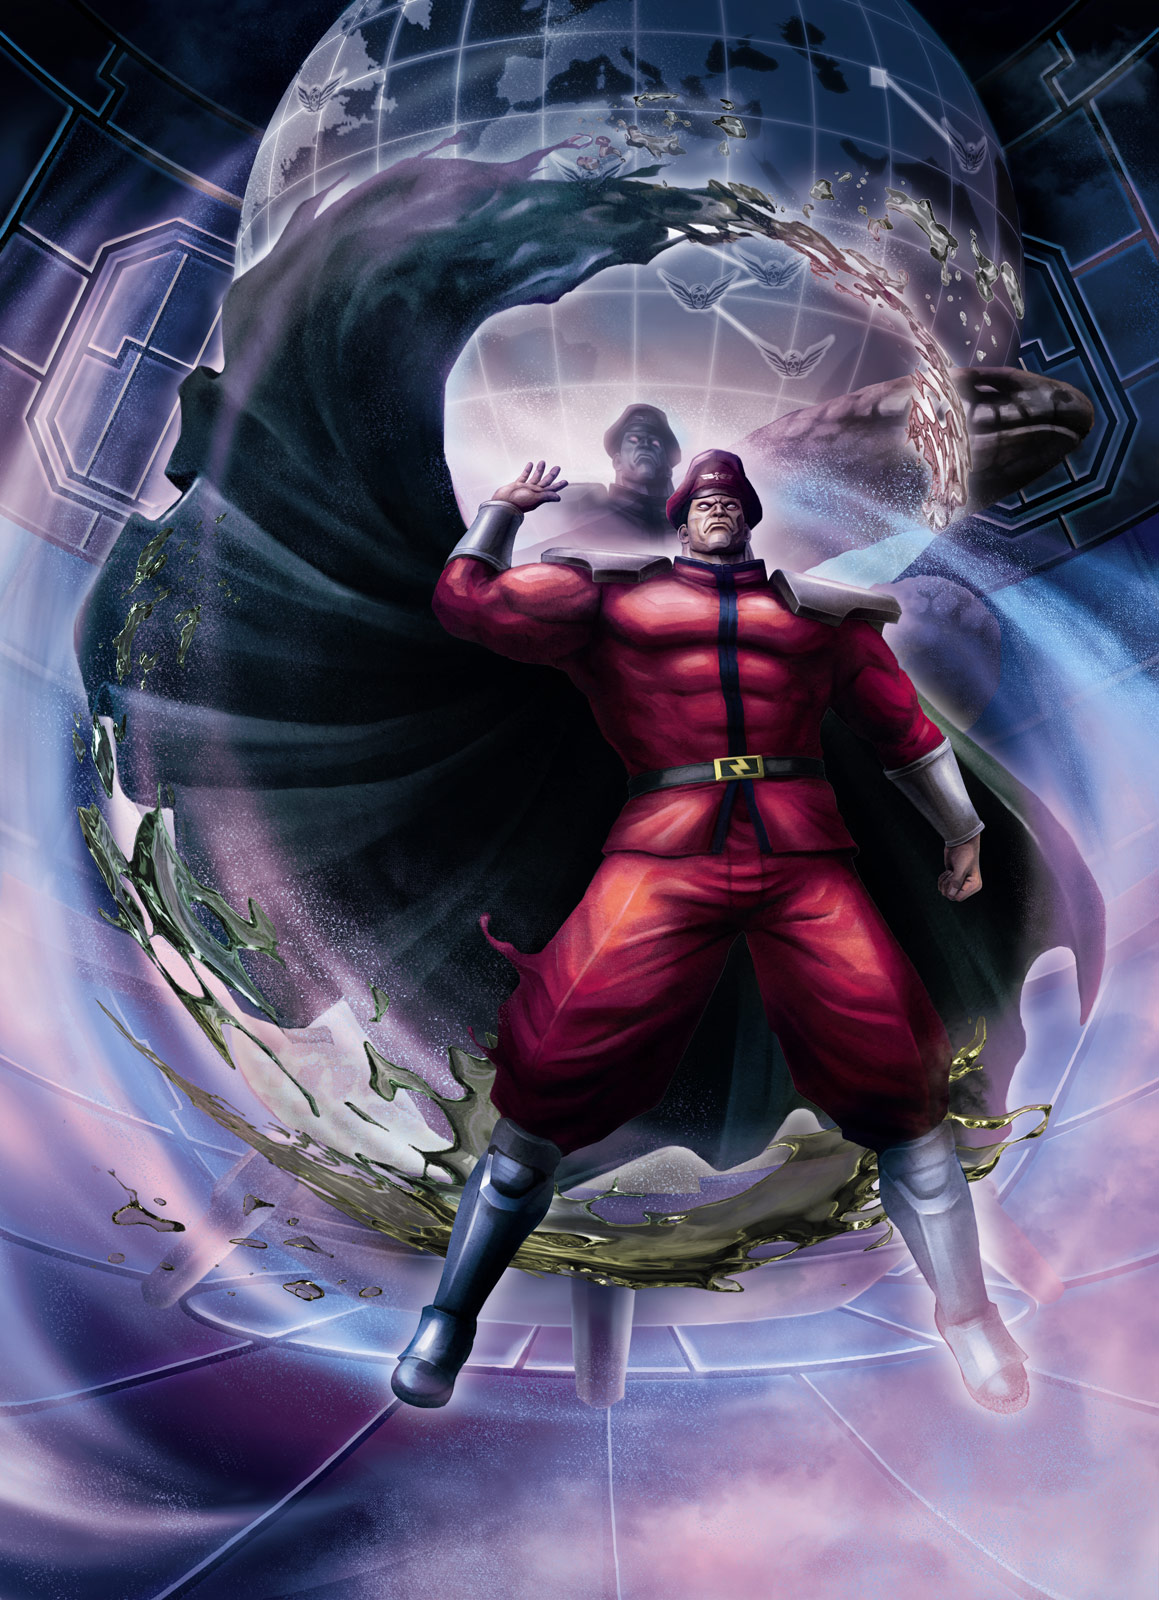 Street Fighter X Tekken TFG Review / Artwork Gallery